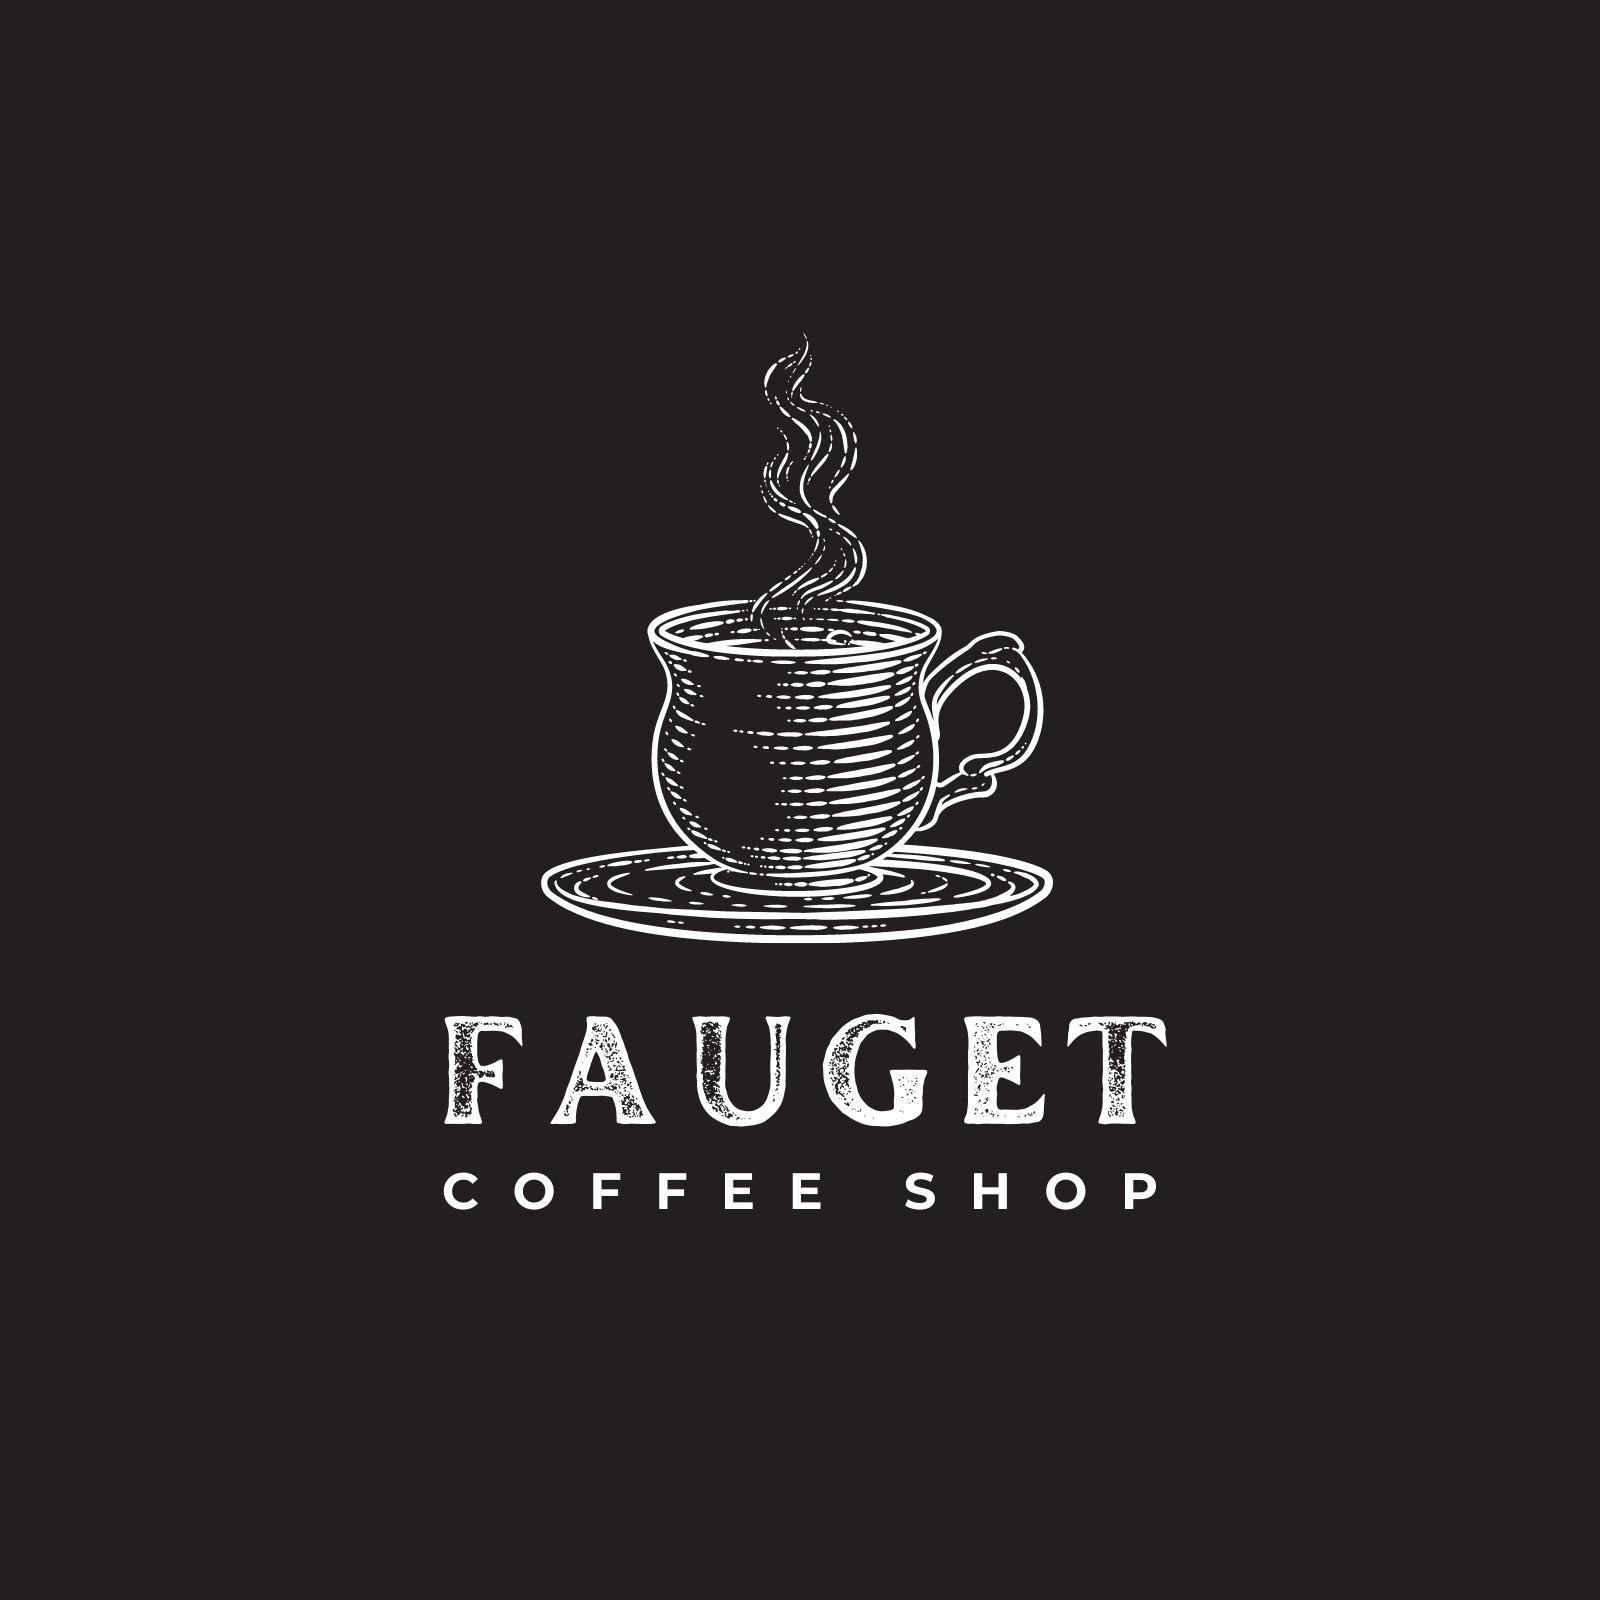 Cafe Logo / Coffee Logo Design / Drinks Logo Design / Cup Logo